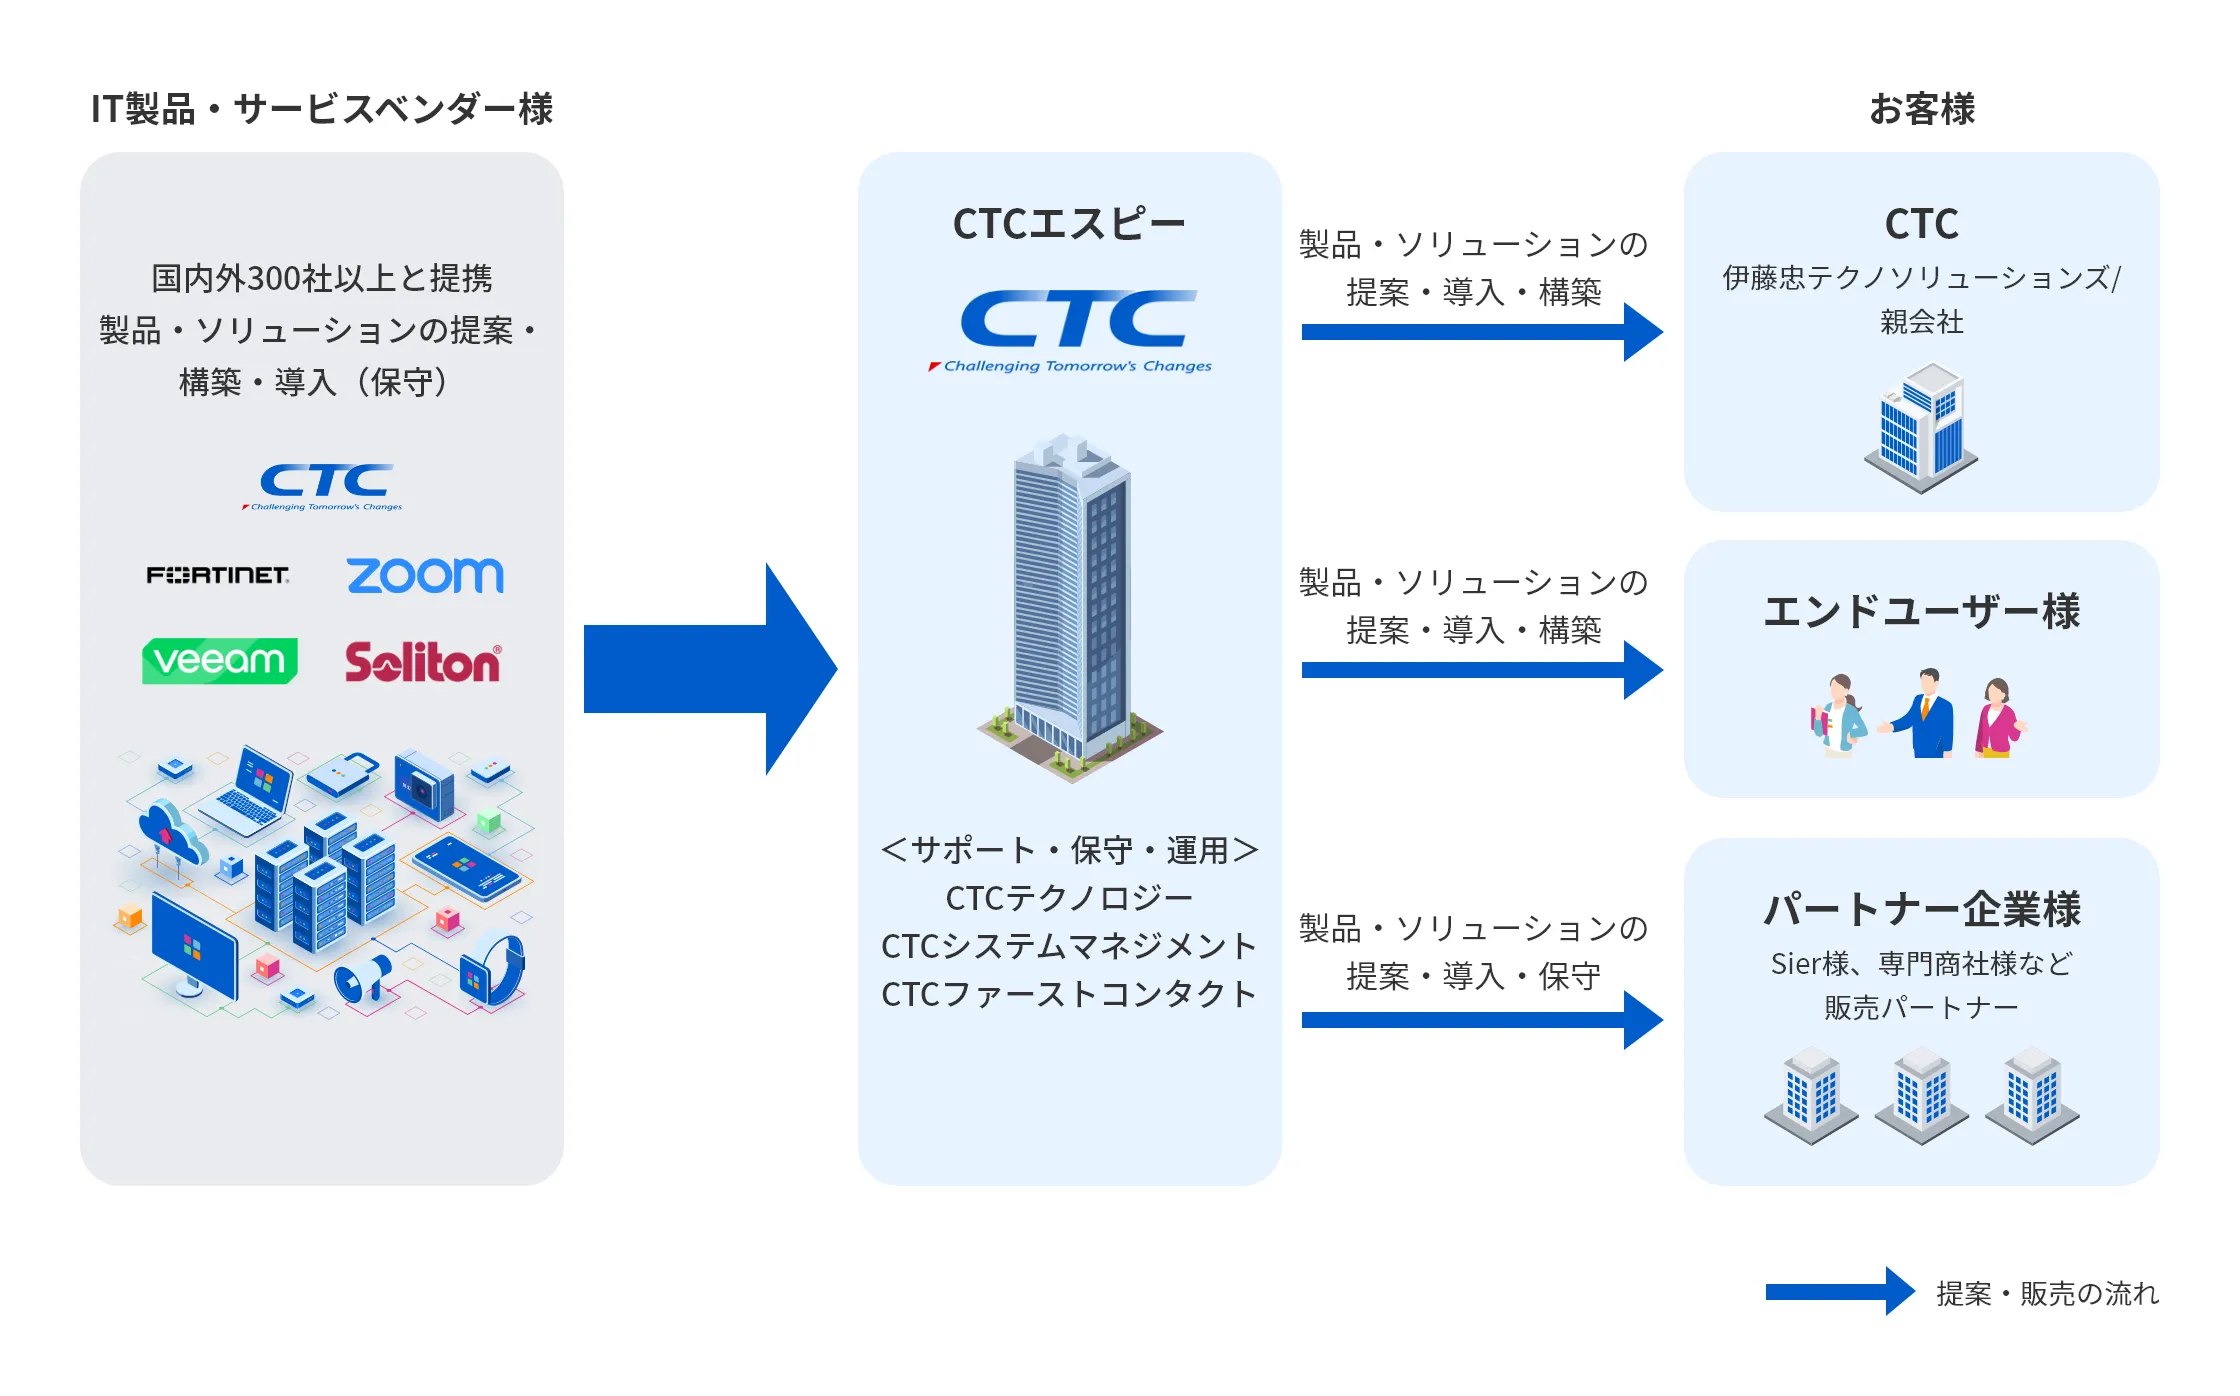 CTCエスピー株式会社のソリューション提供の図